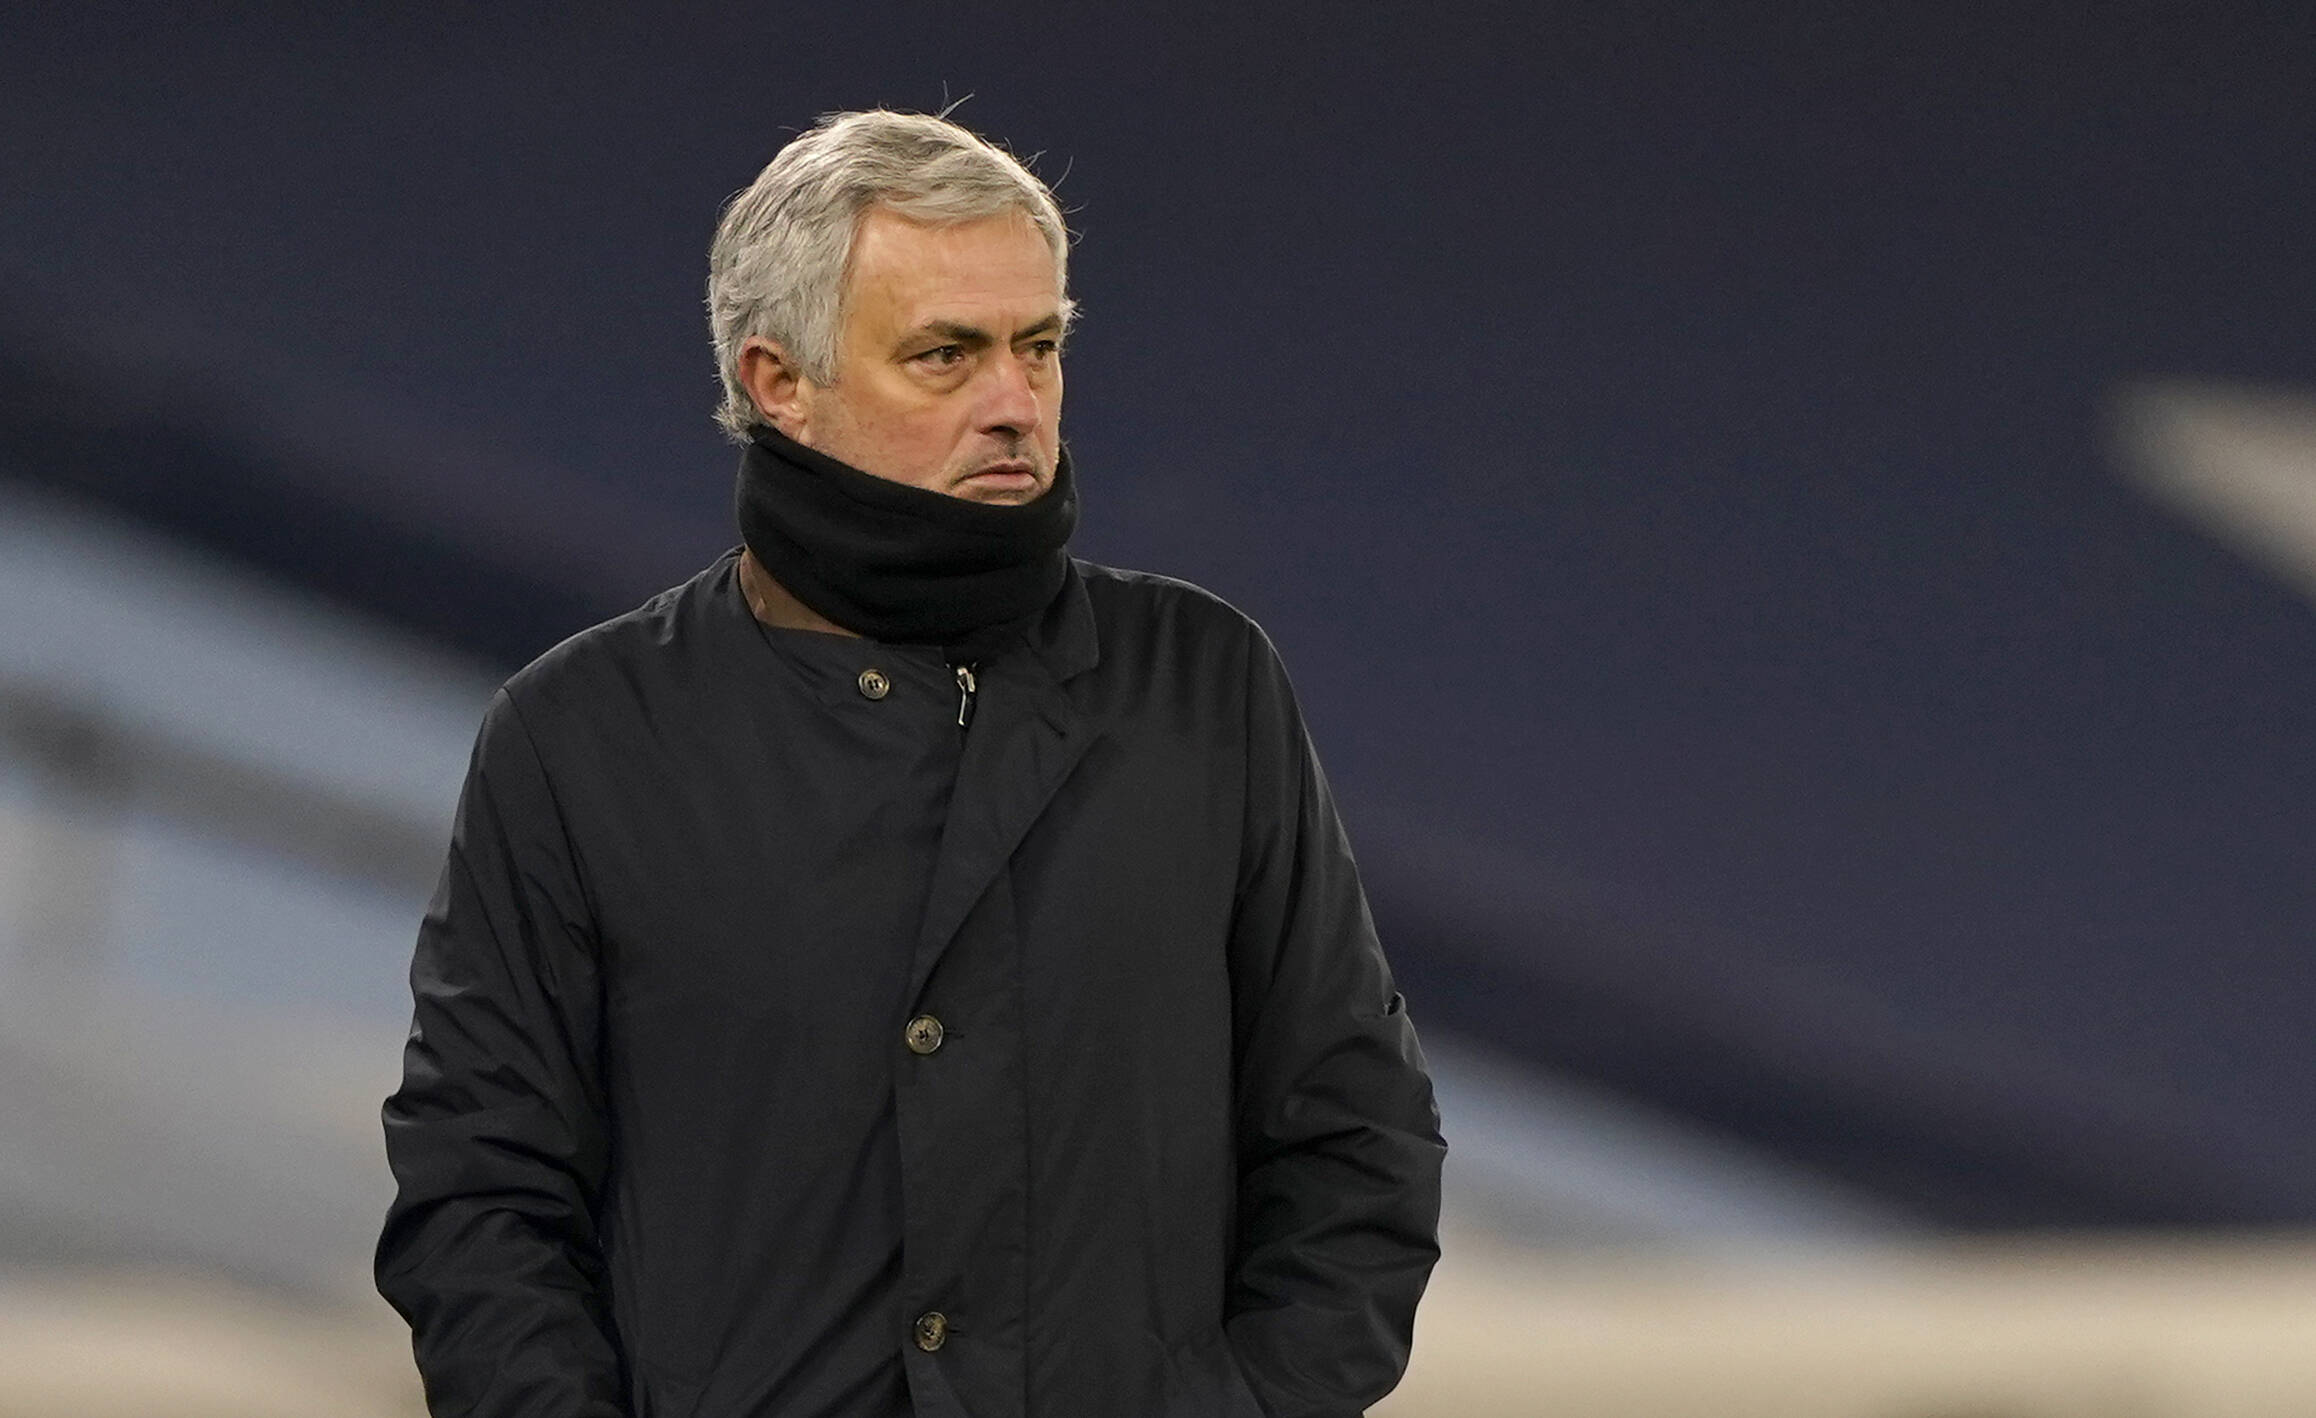 Jose Mourinho has come under intense pressure at Tottenham